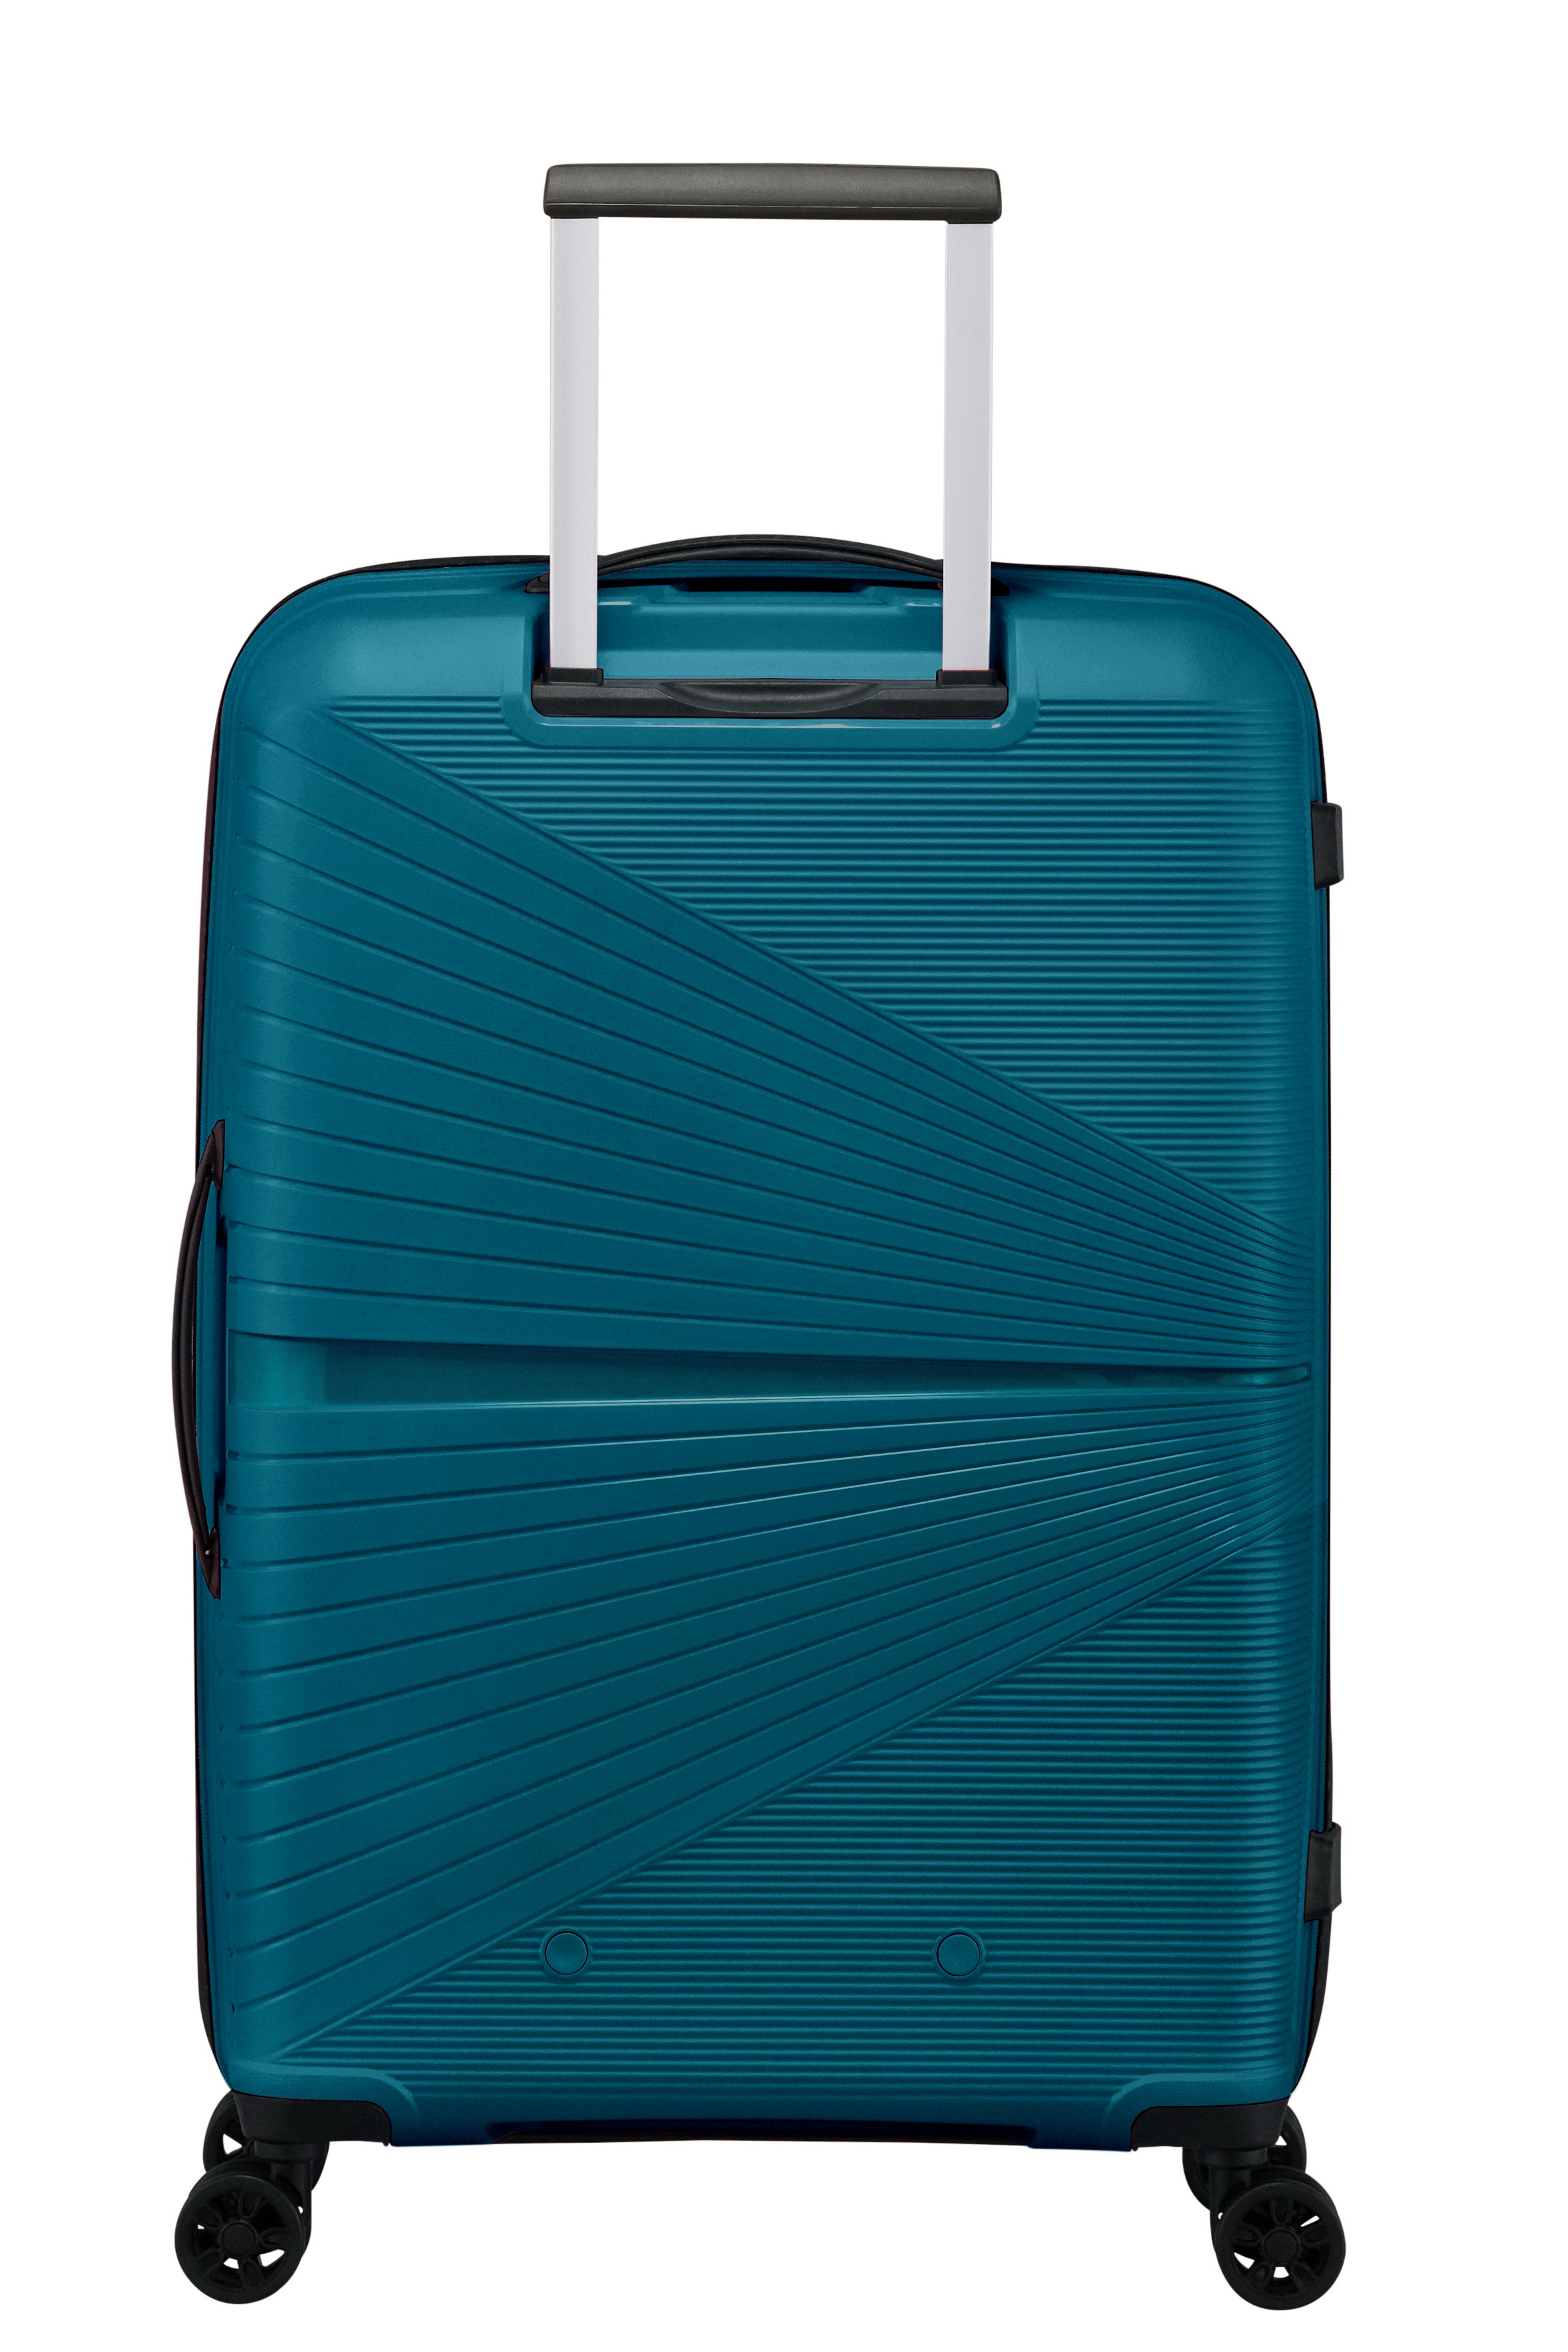 American Tourister - Airconic 67cm Medium Suitcase - Deep Ocean-4